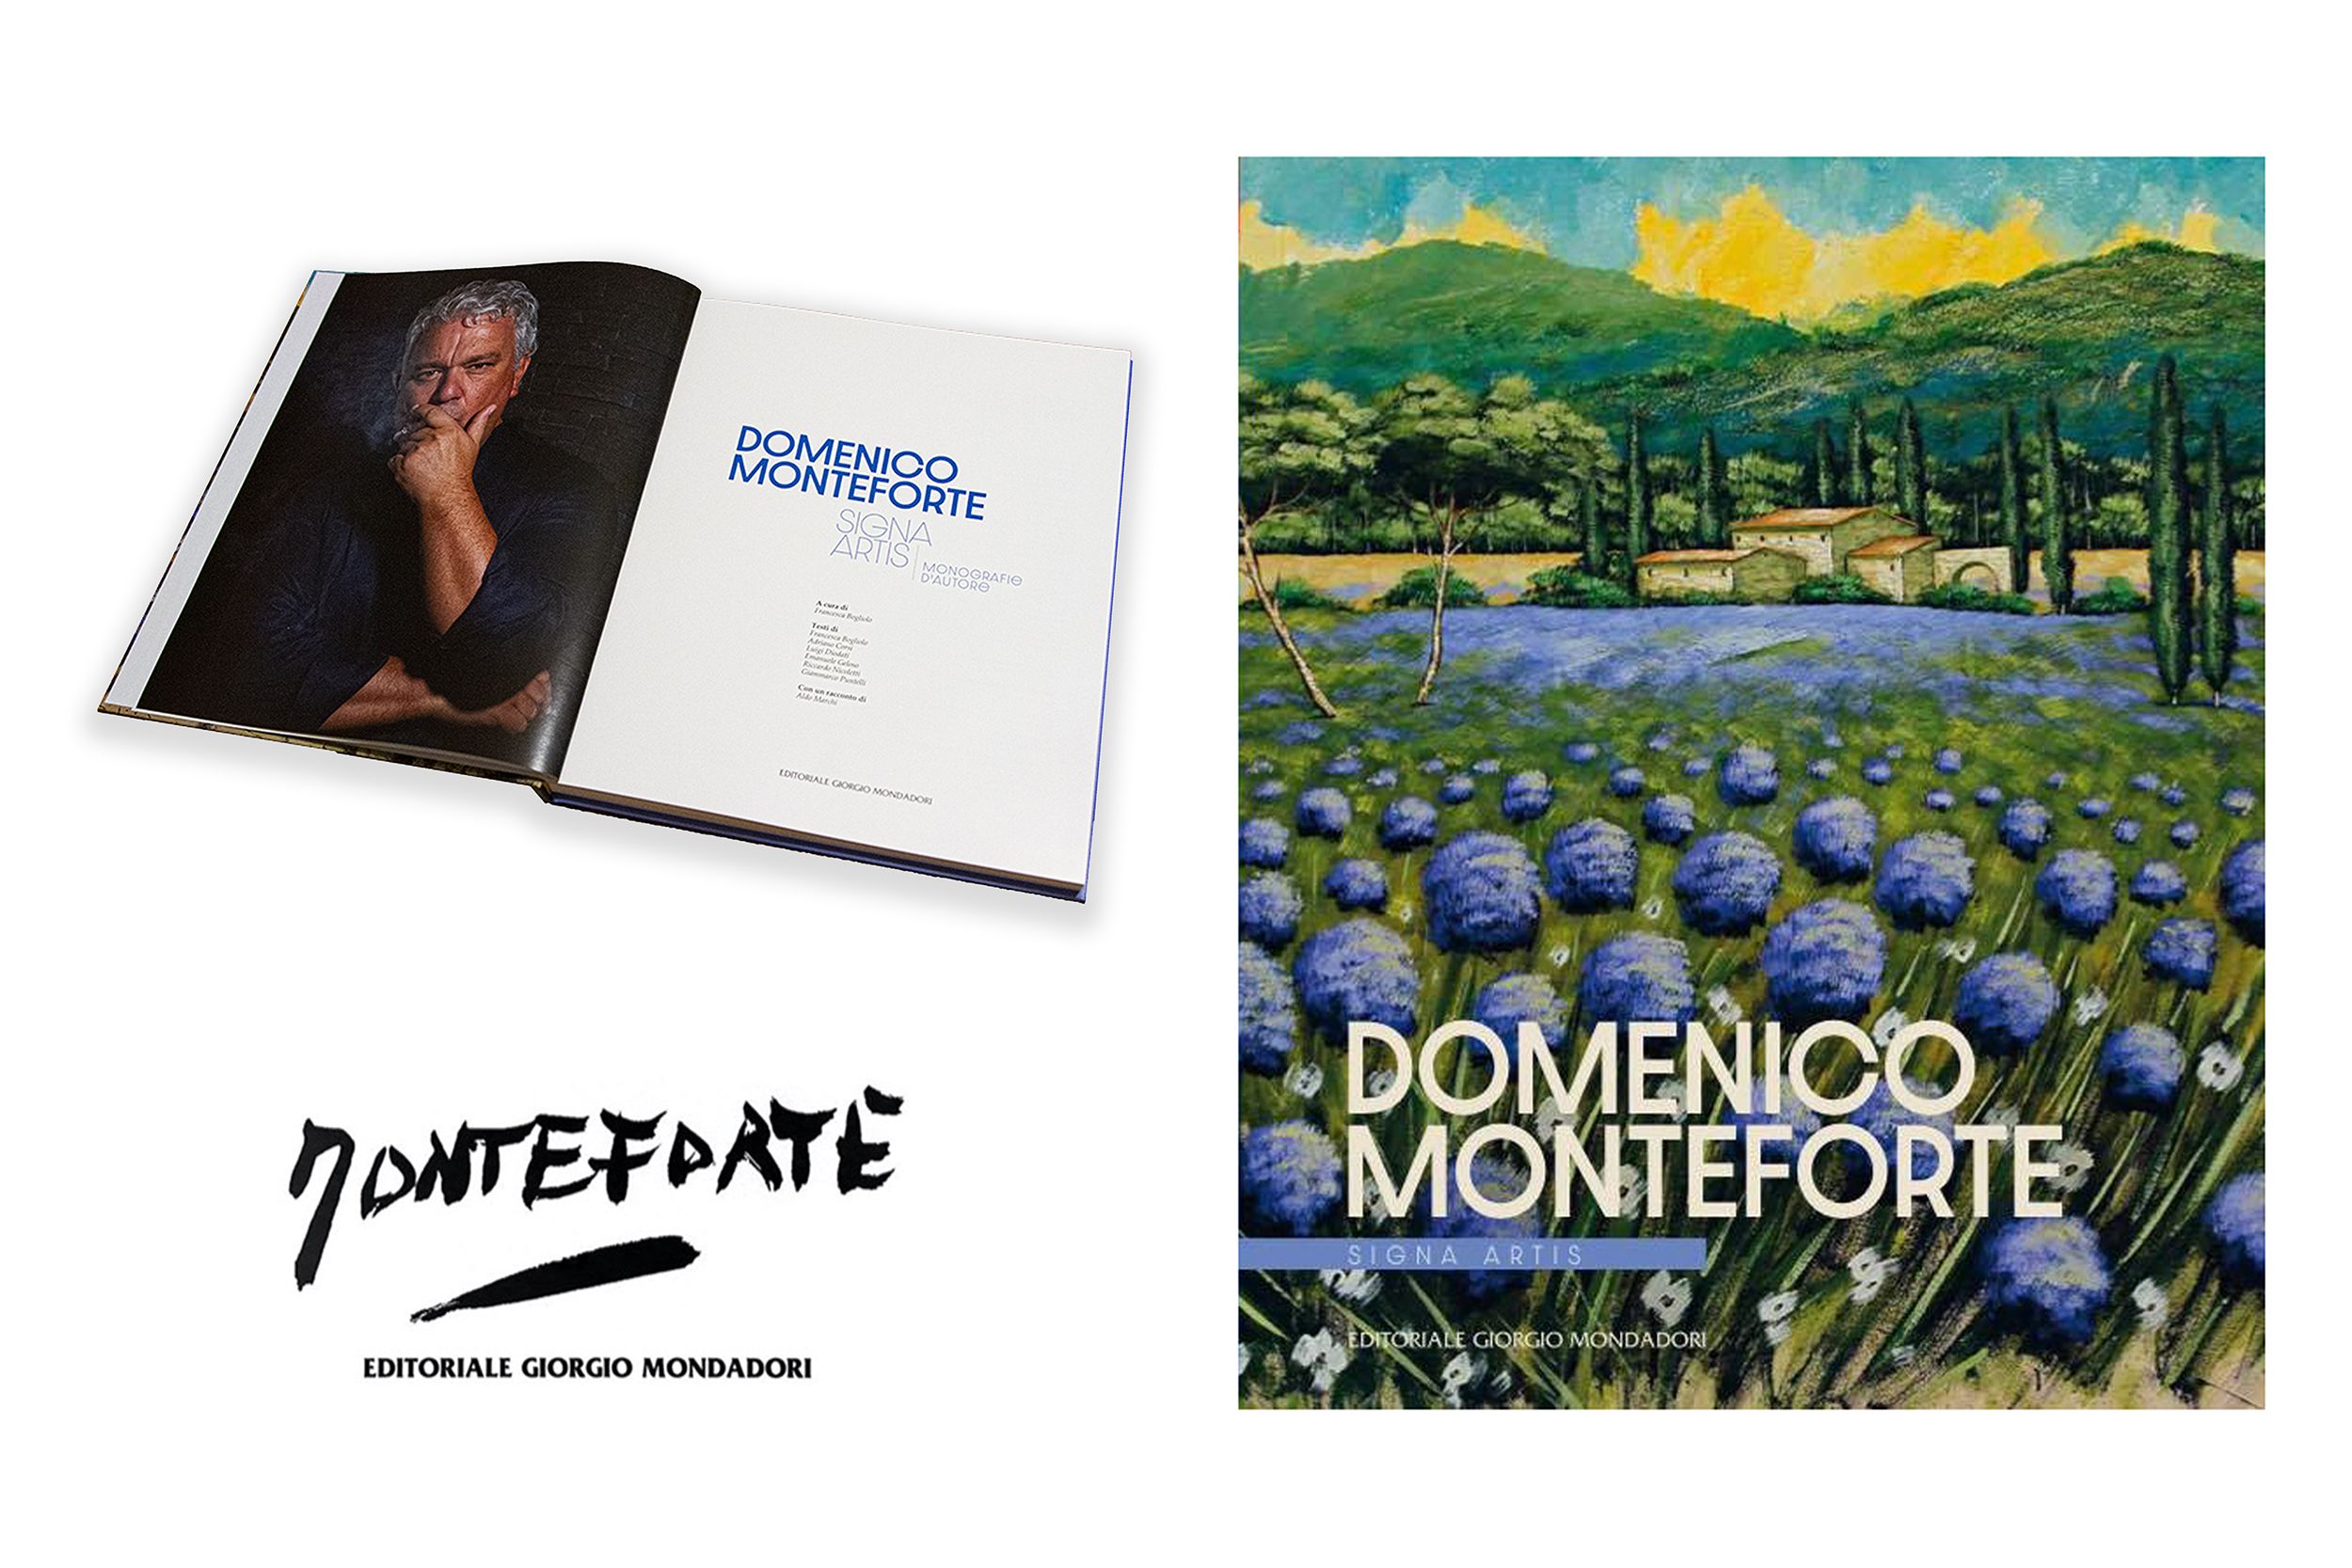 Domenico Monteforte, monografia 2020 - Editoriale Giorgio Mondadori.